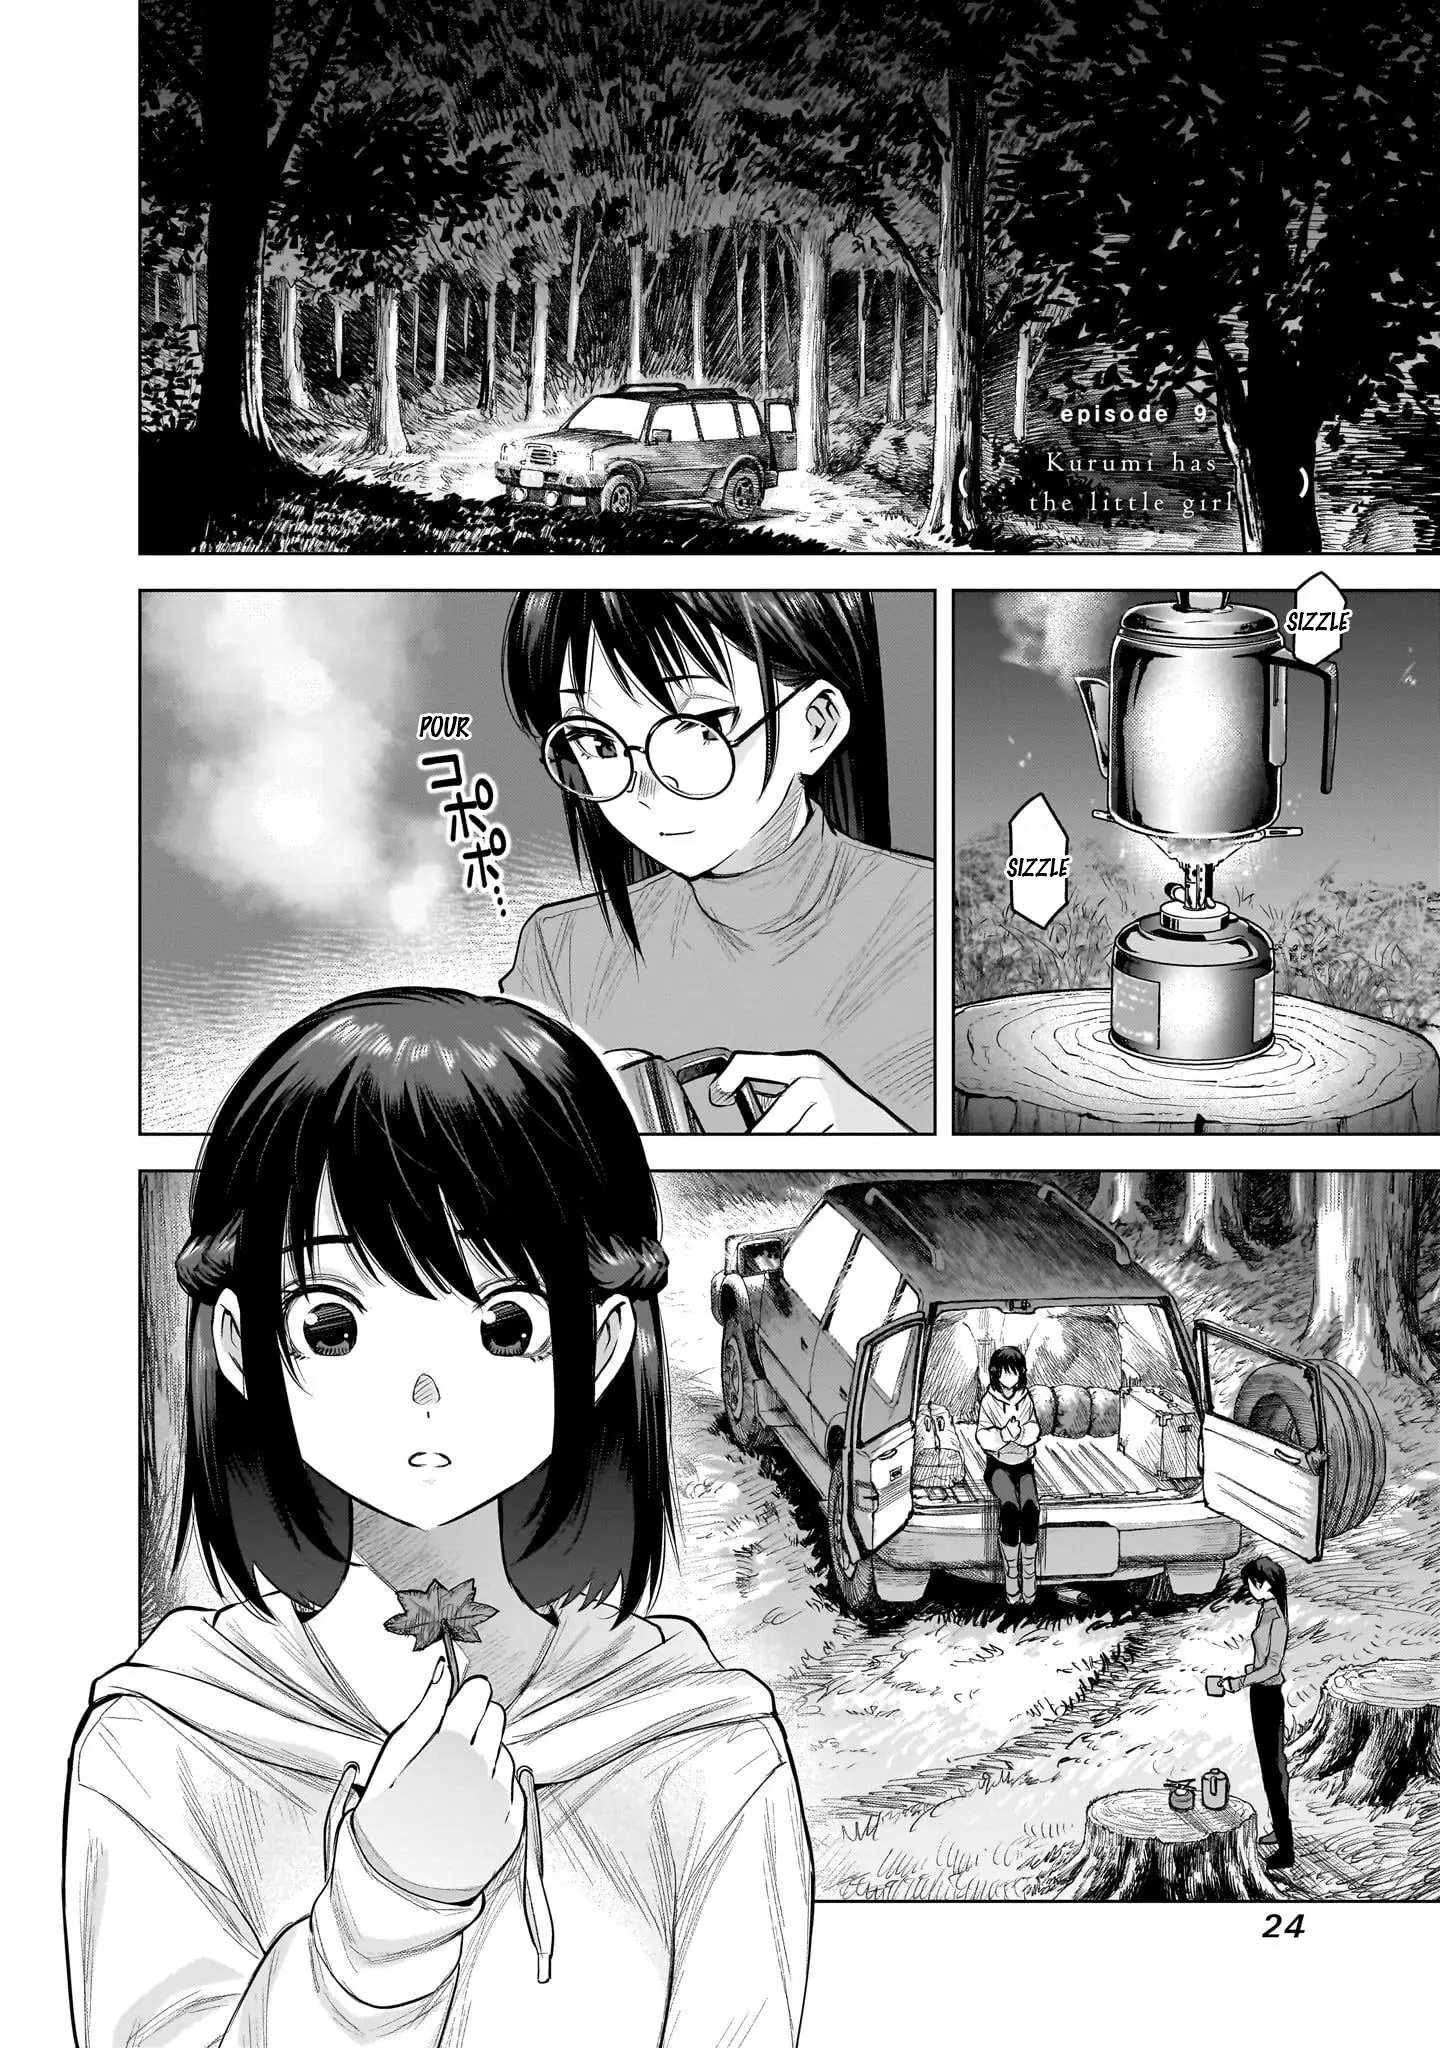 Domestic Girlfriend Volume 9 (Domestic na Kanojo) - Manga Store